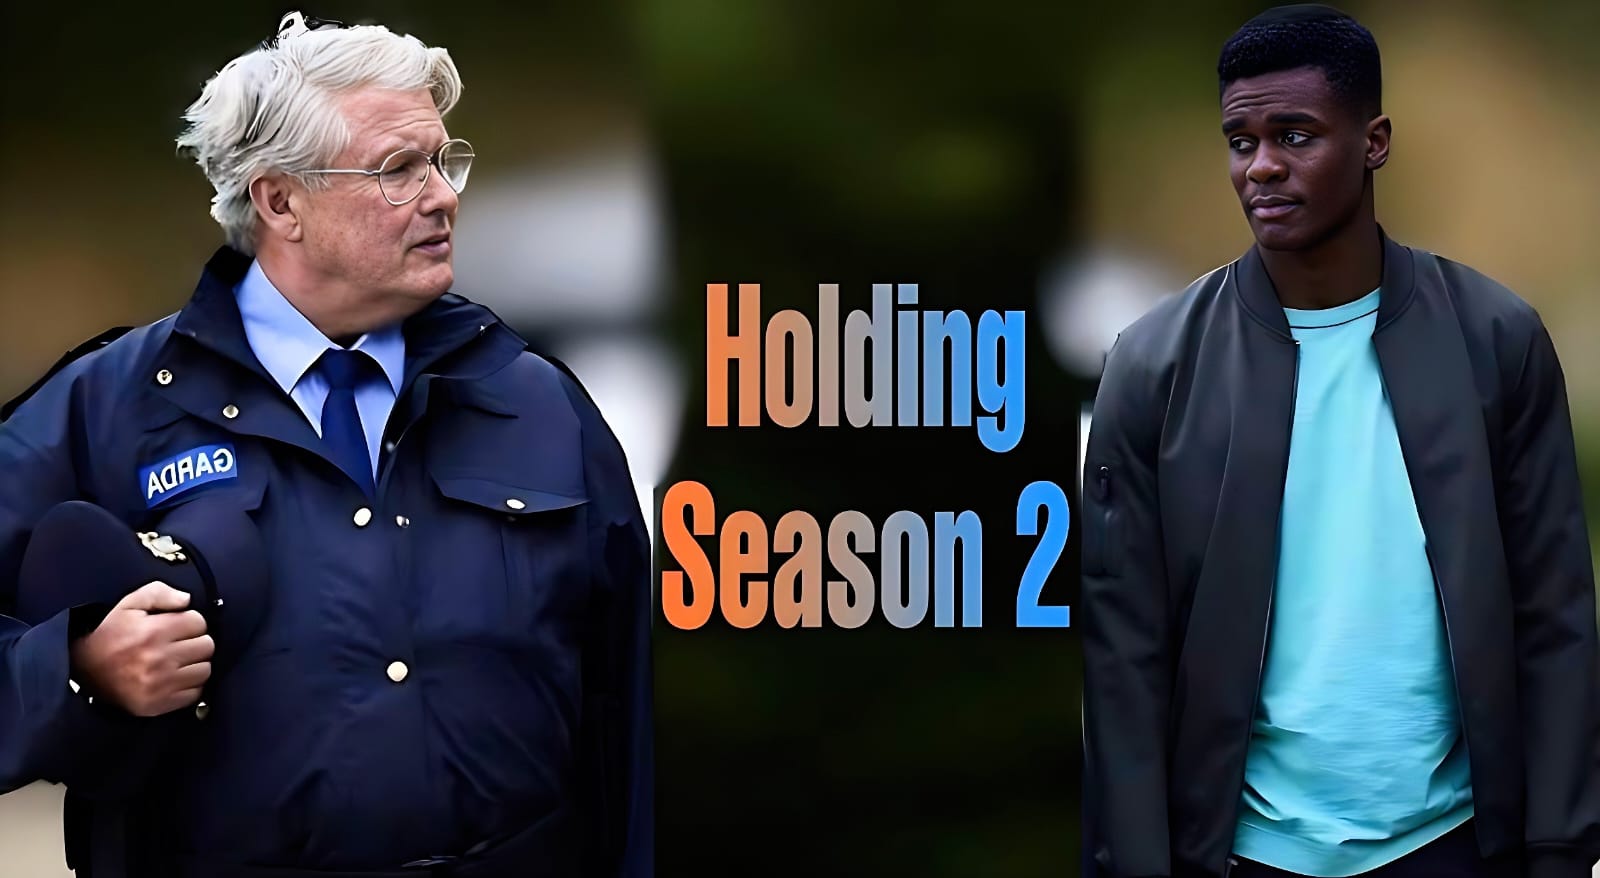 Holding Season 2